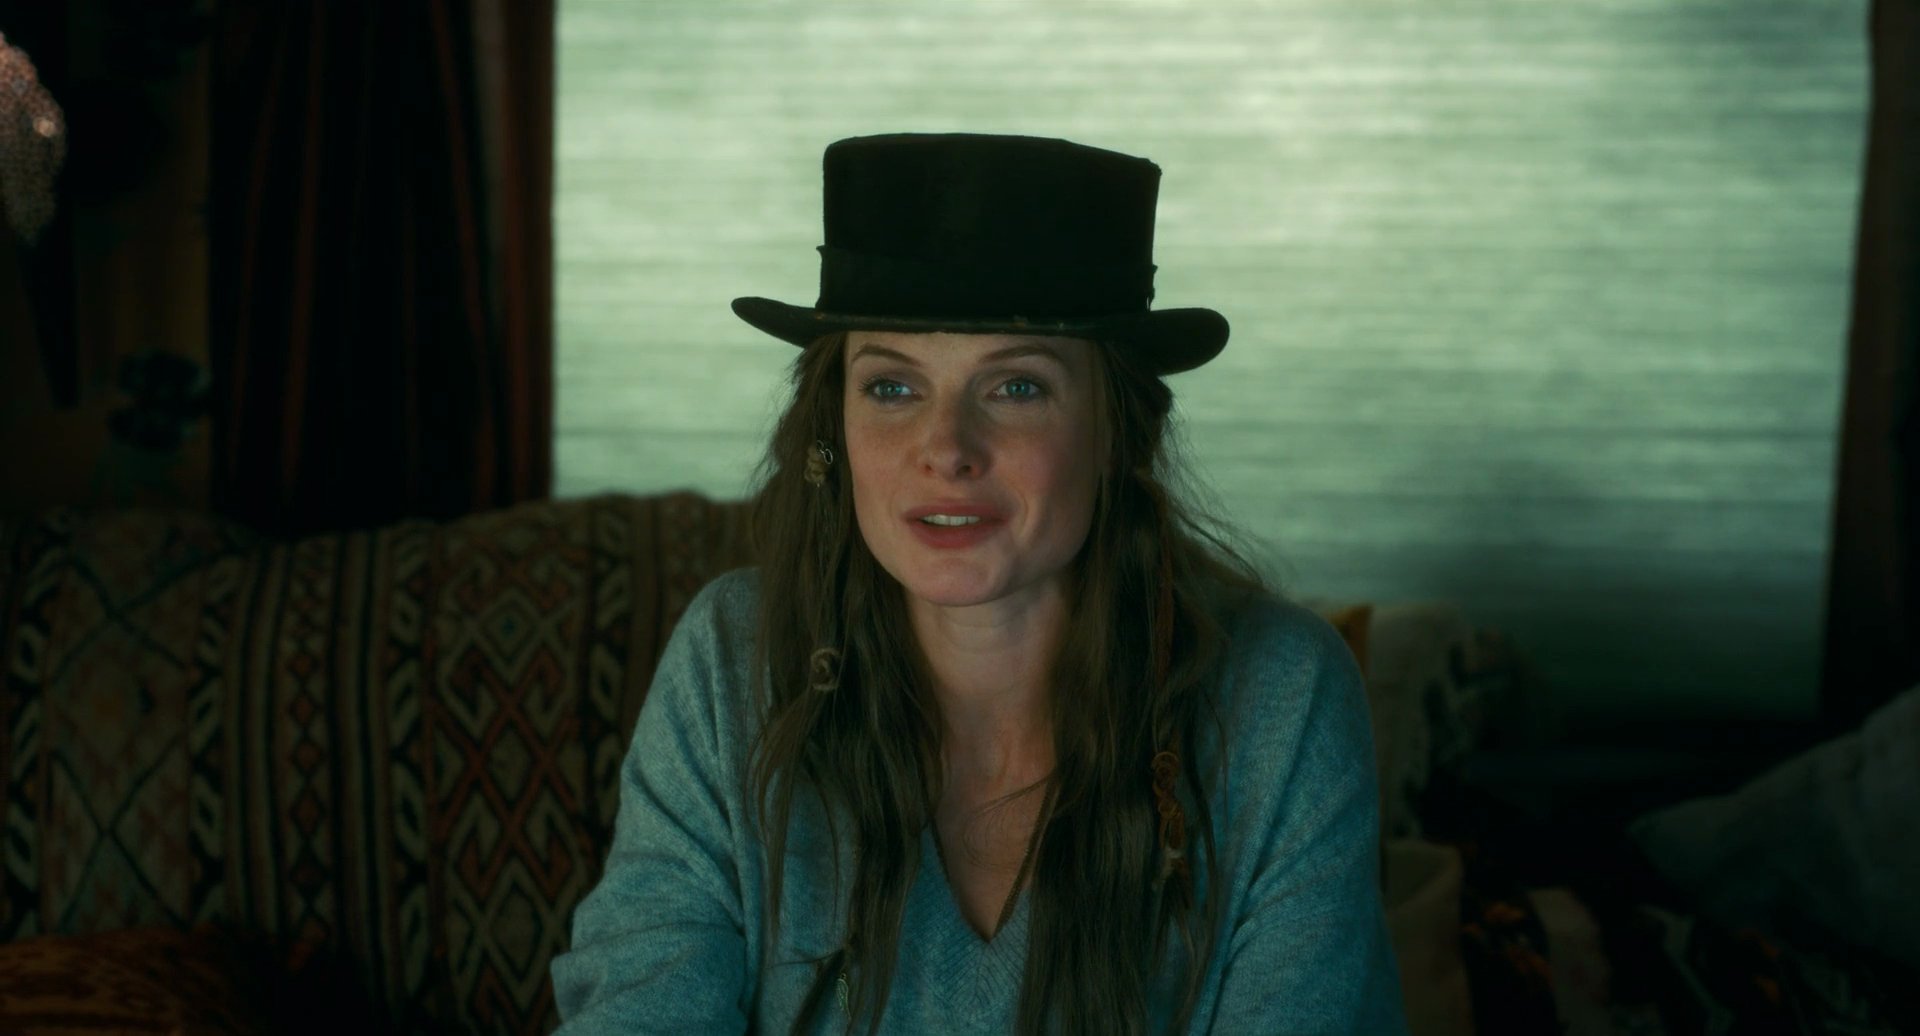 “Rebecca Ferguson as Rose the Hat in Doctor Sleep - Director's Cut...